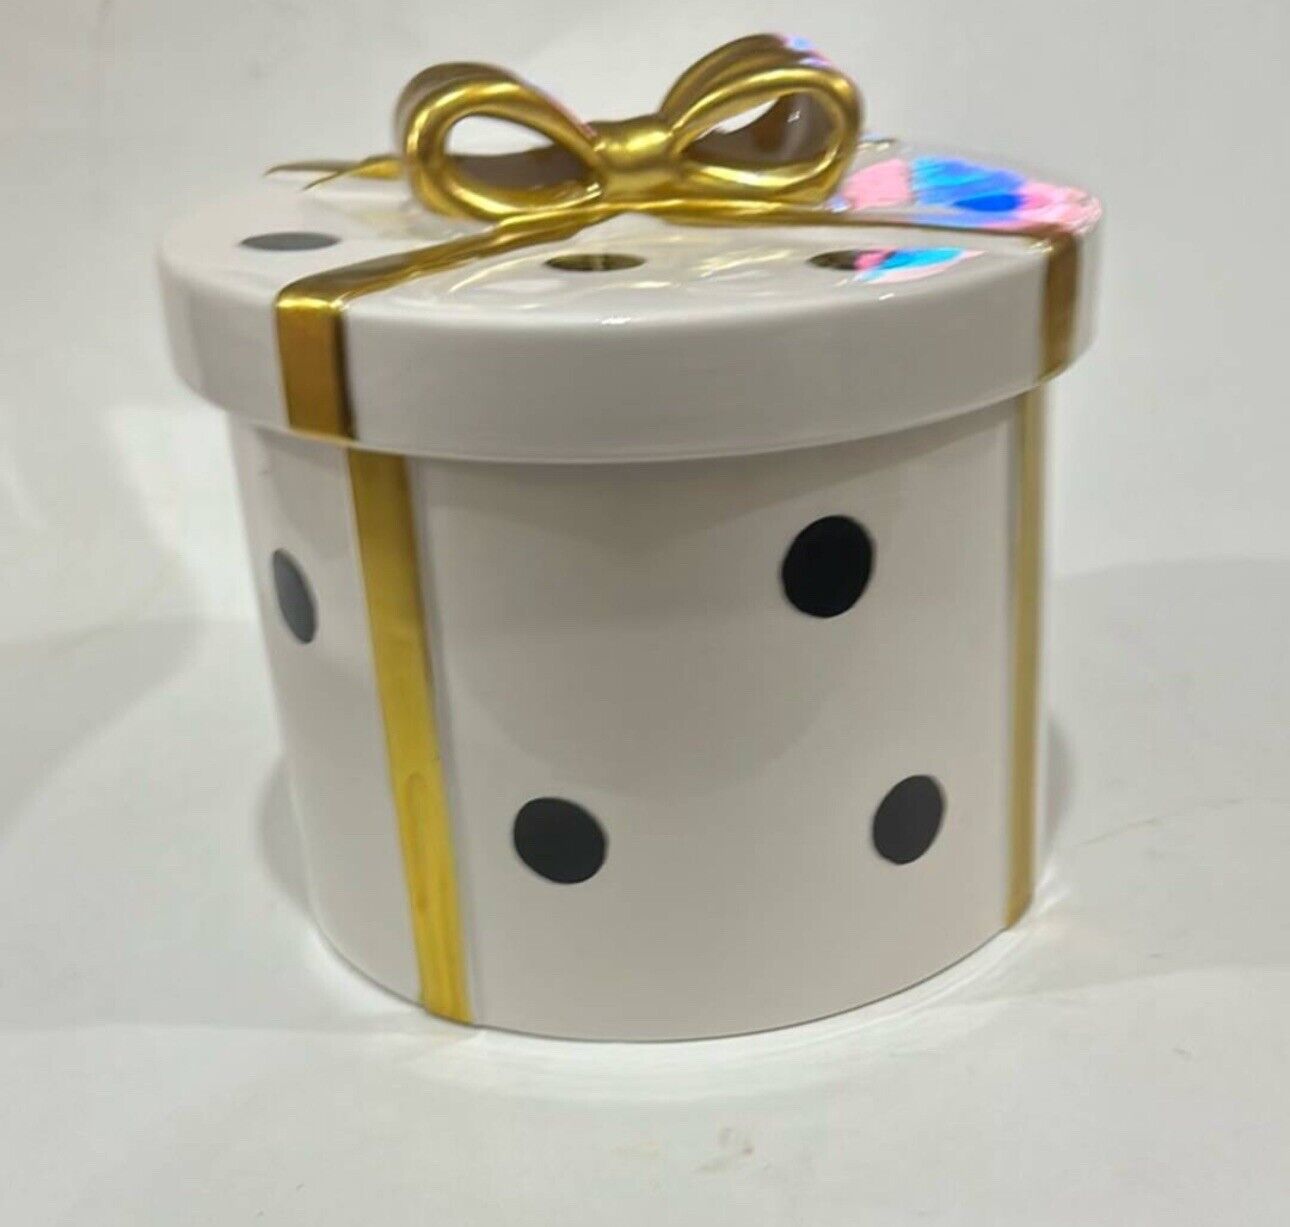 Robert Stanley Cookie Jar Present For Christmas